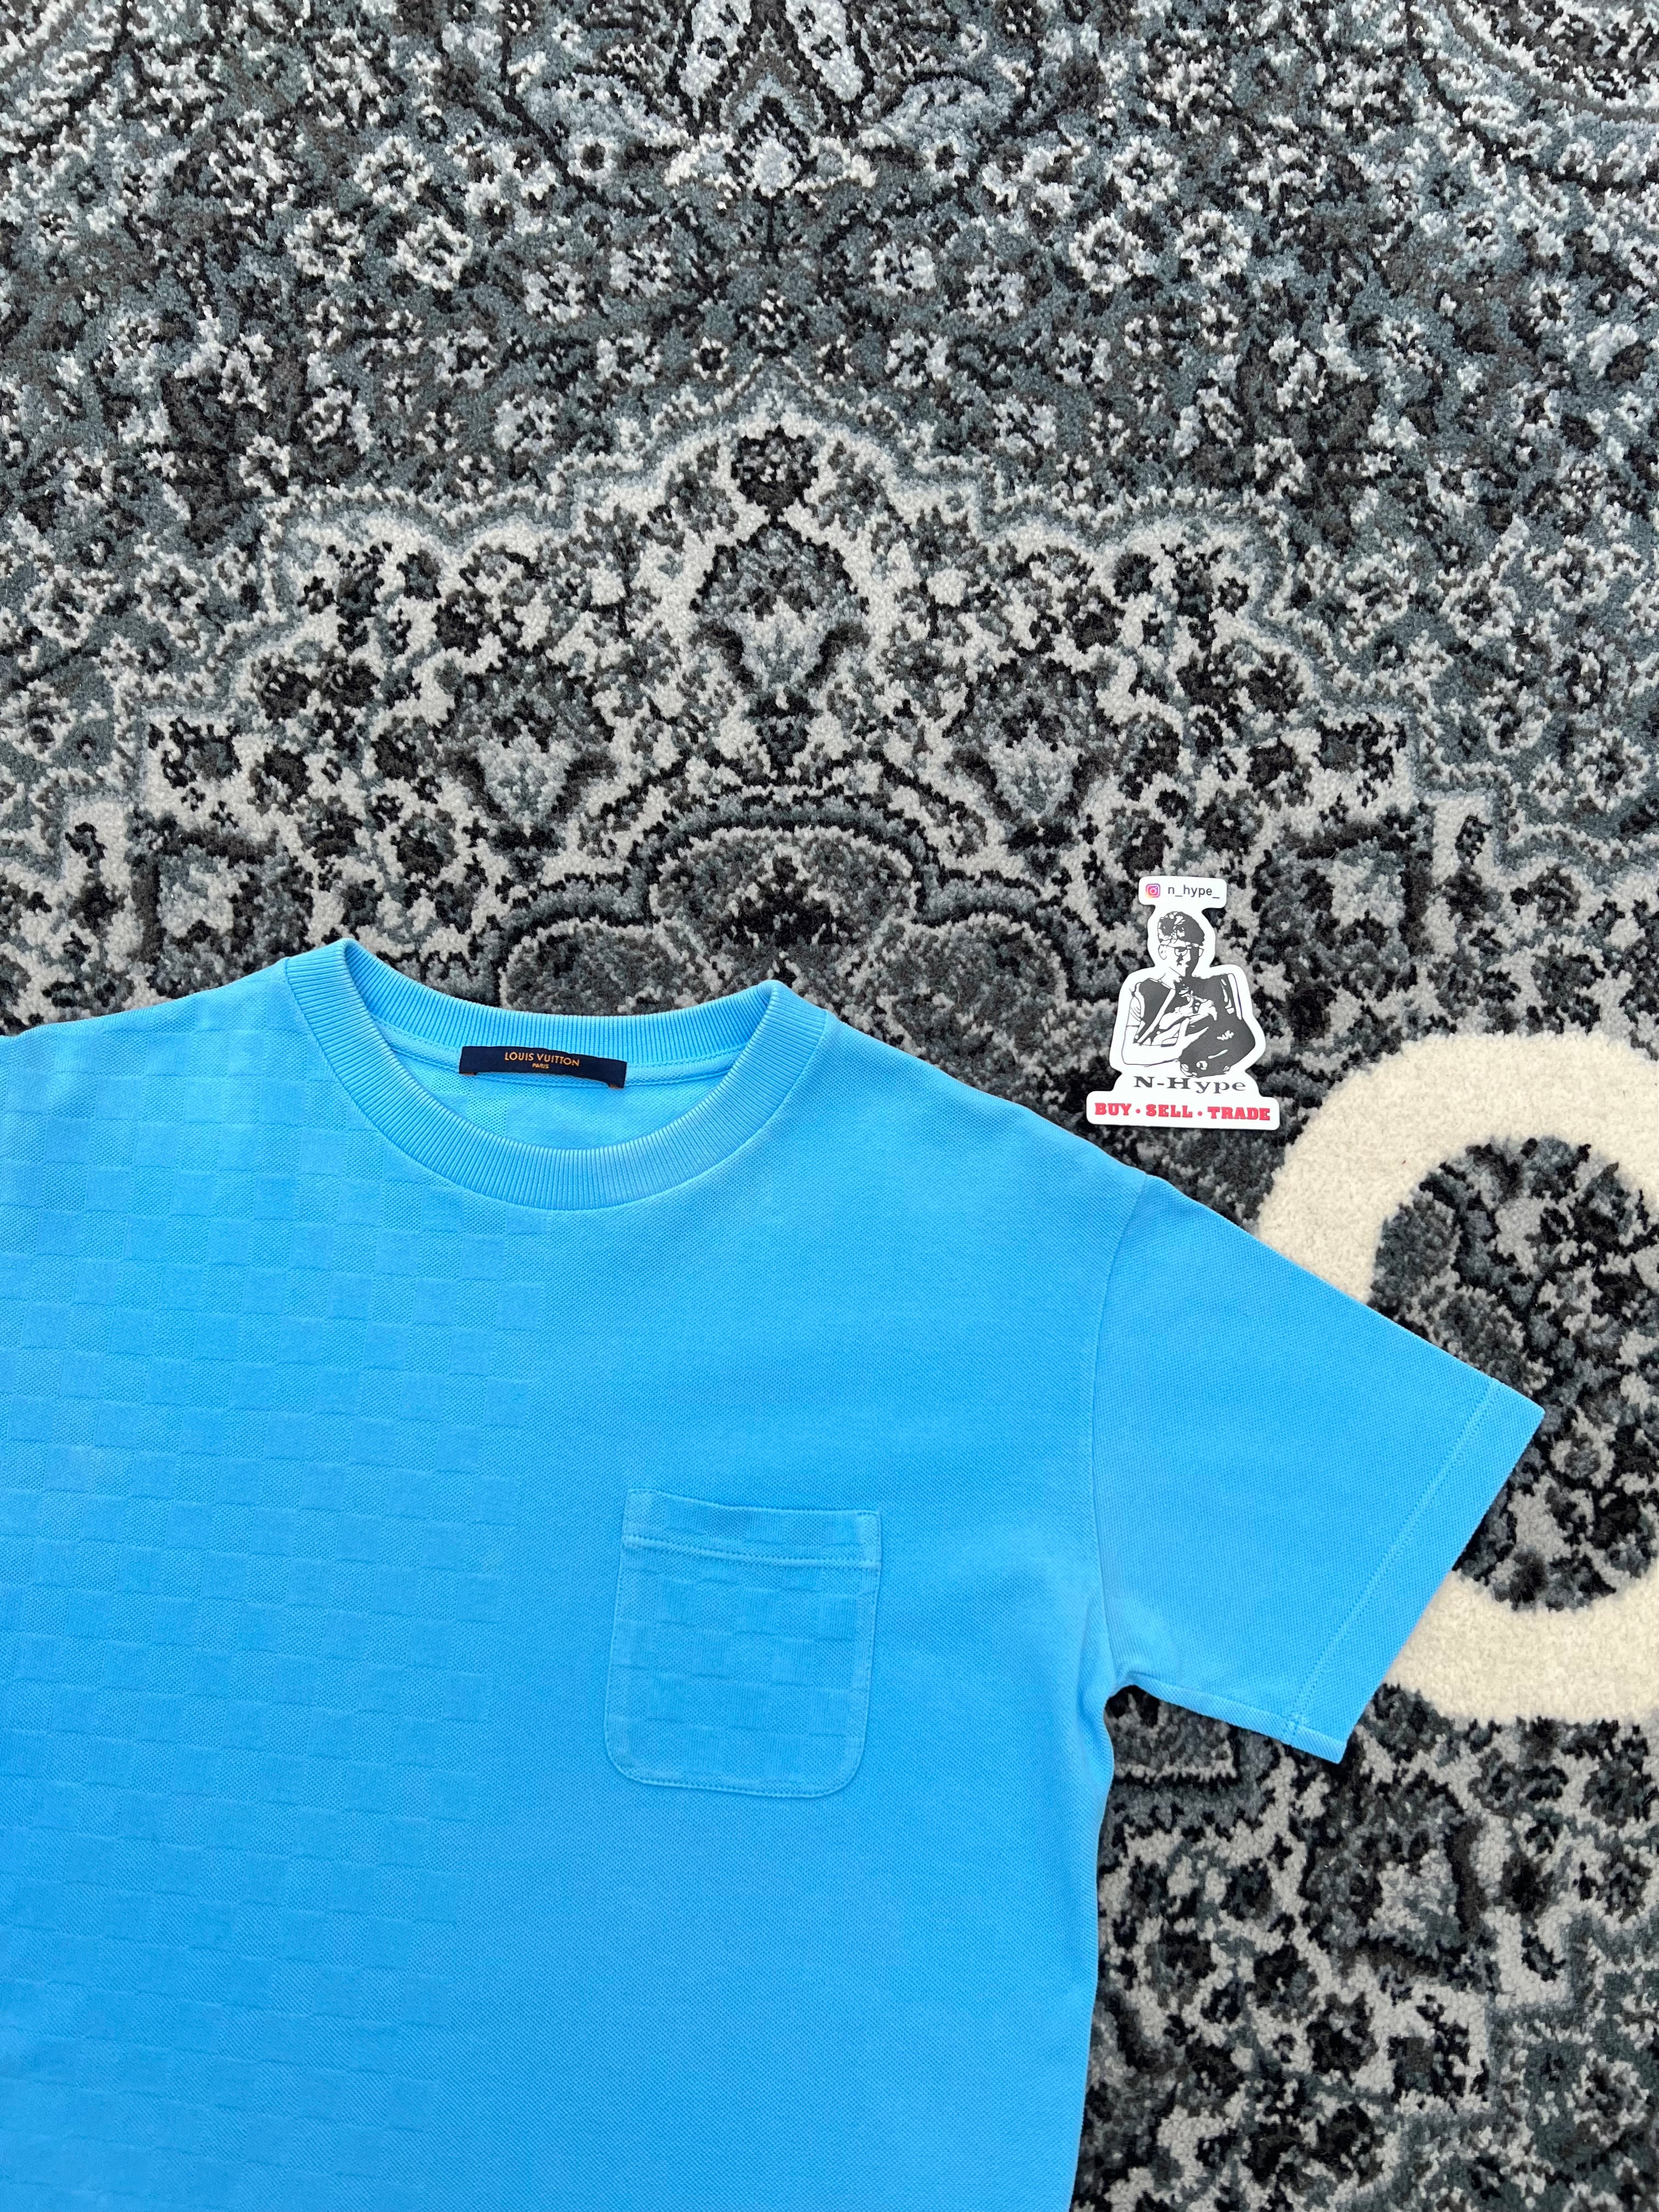 Louis Vuitton Half Damier Pocket T-Shirt Blue Showroom NHype Lodz Polska 2